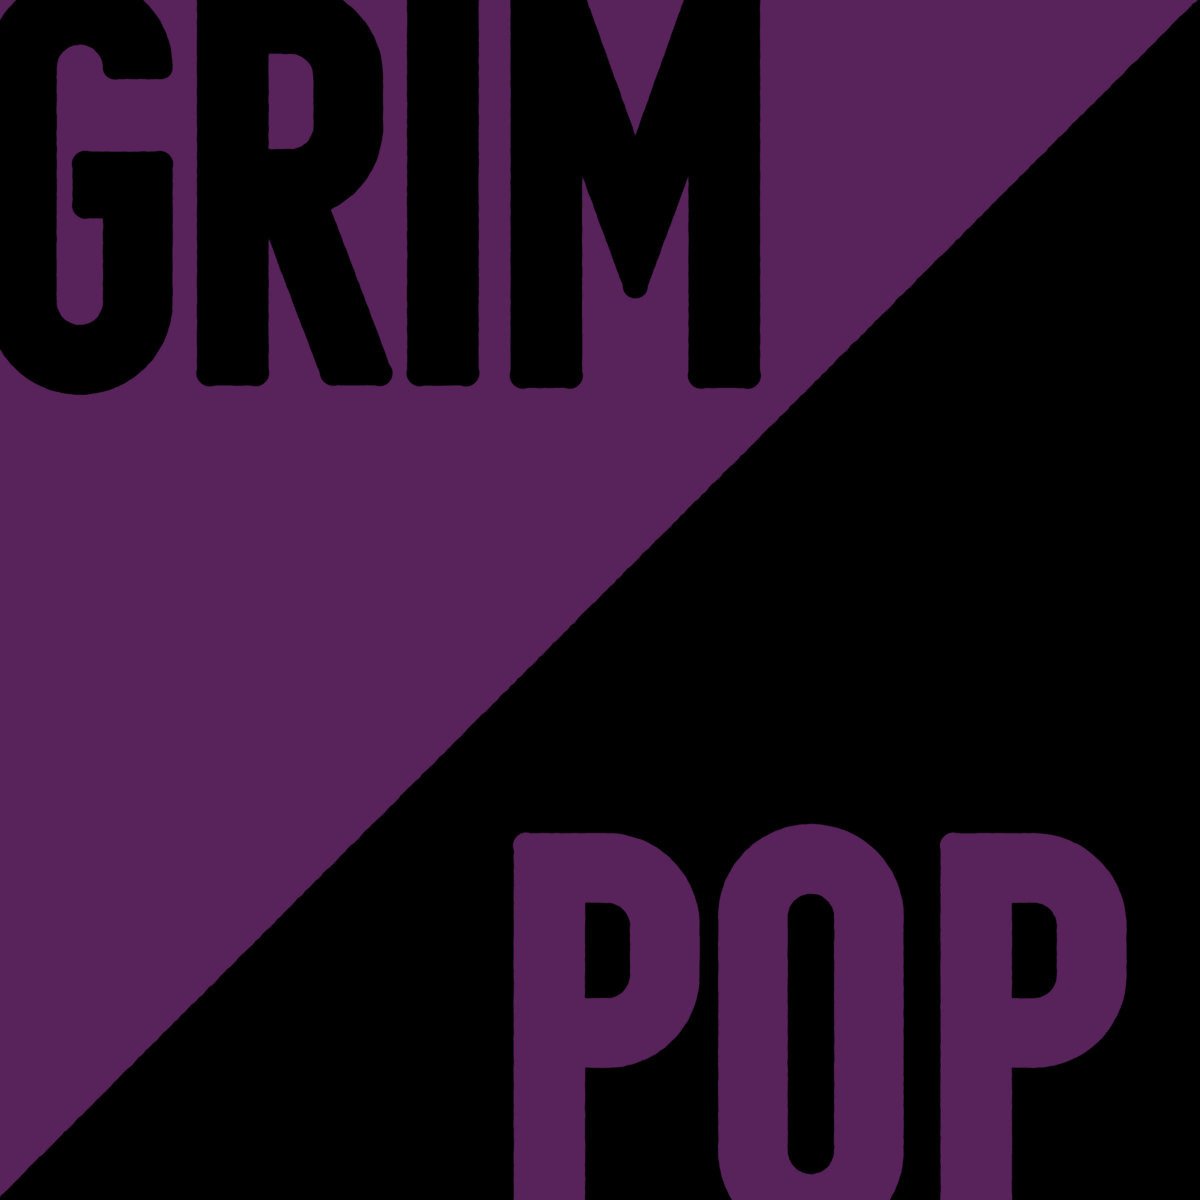 CD Shop - THIS IS NOWHERE GRIM POP